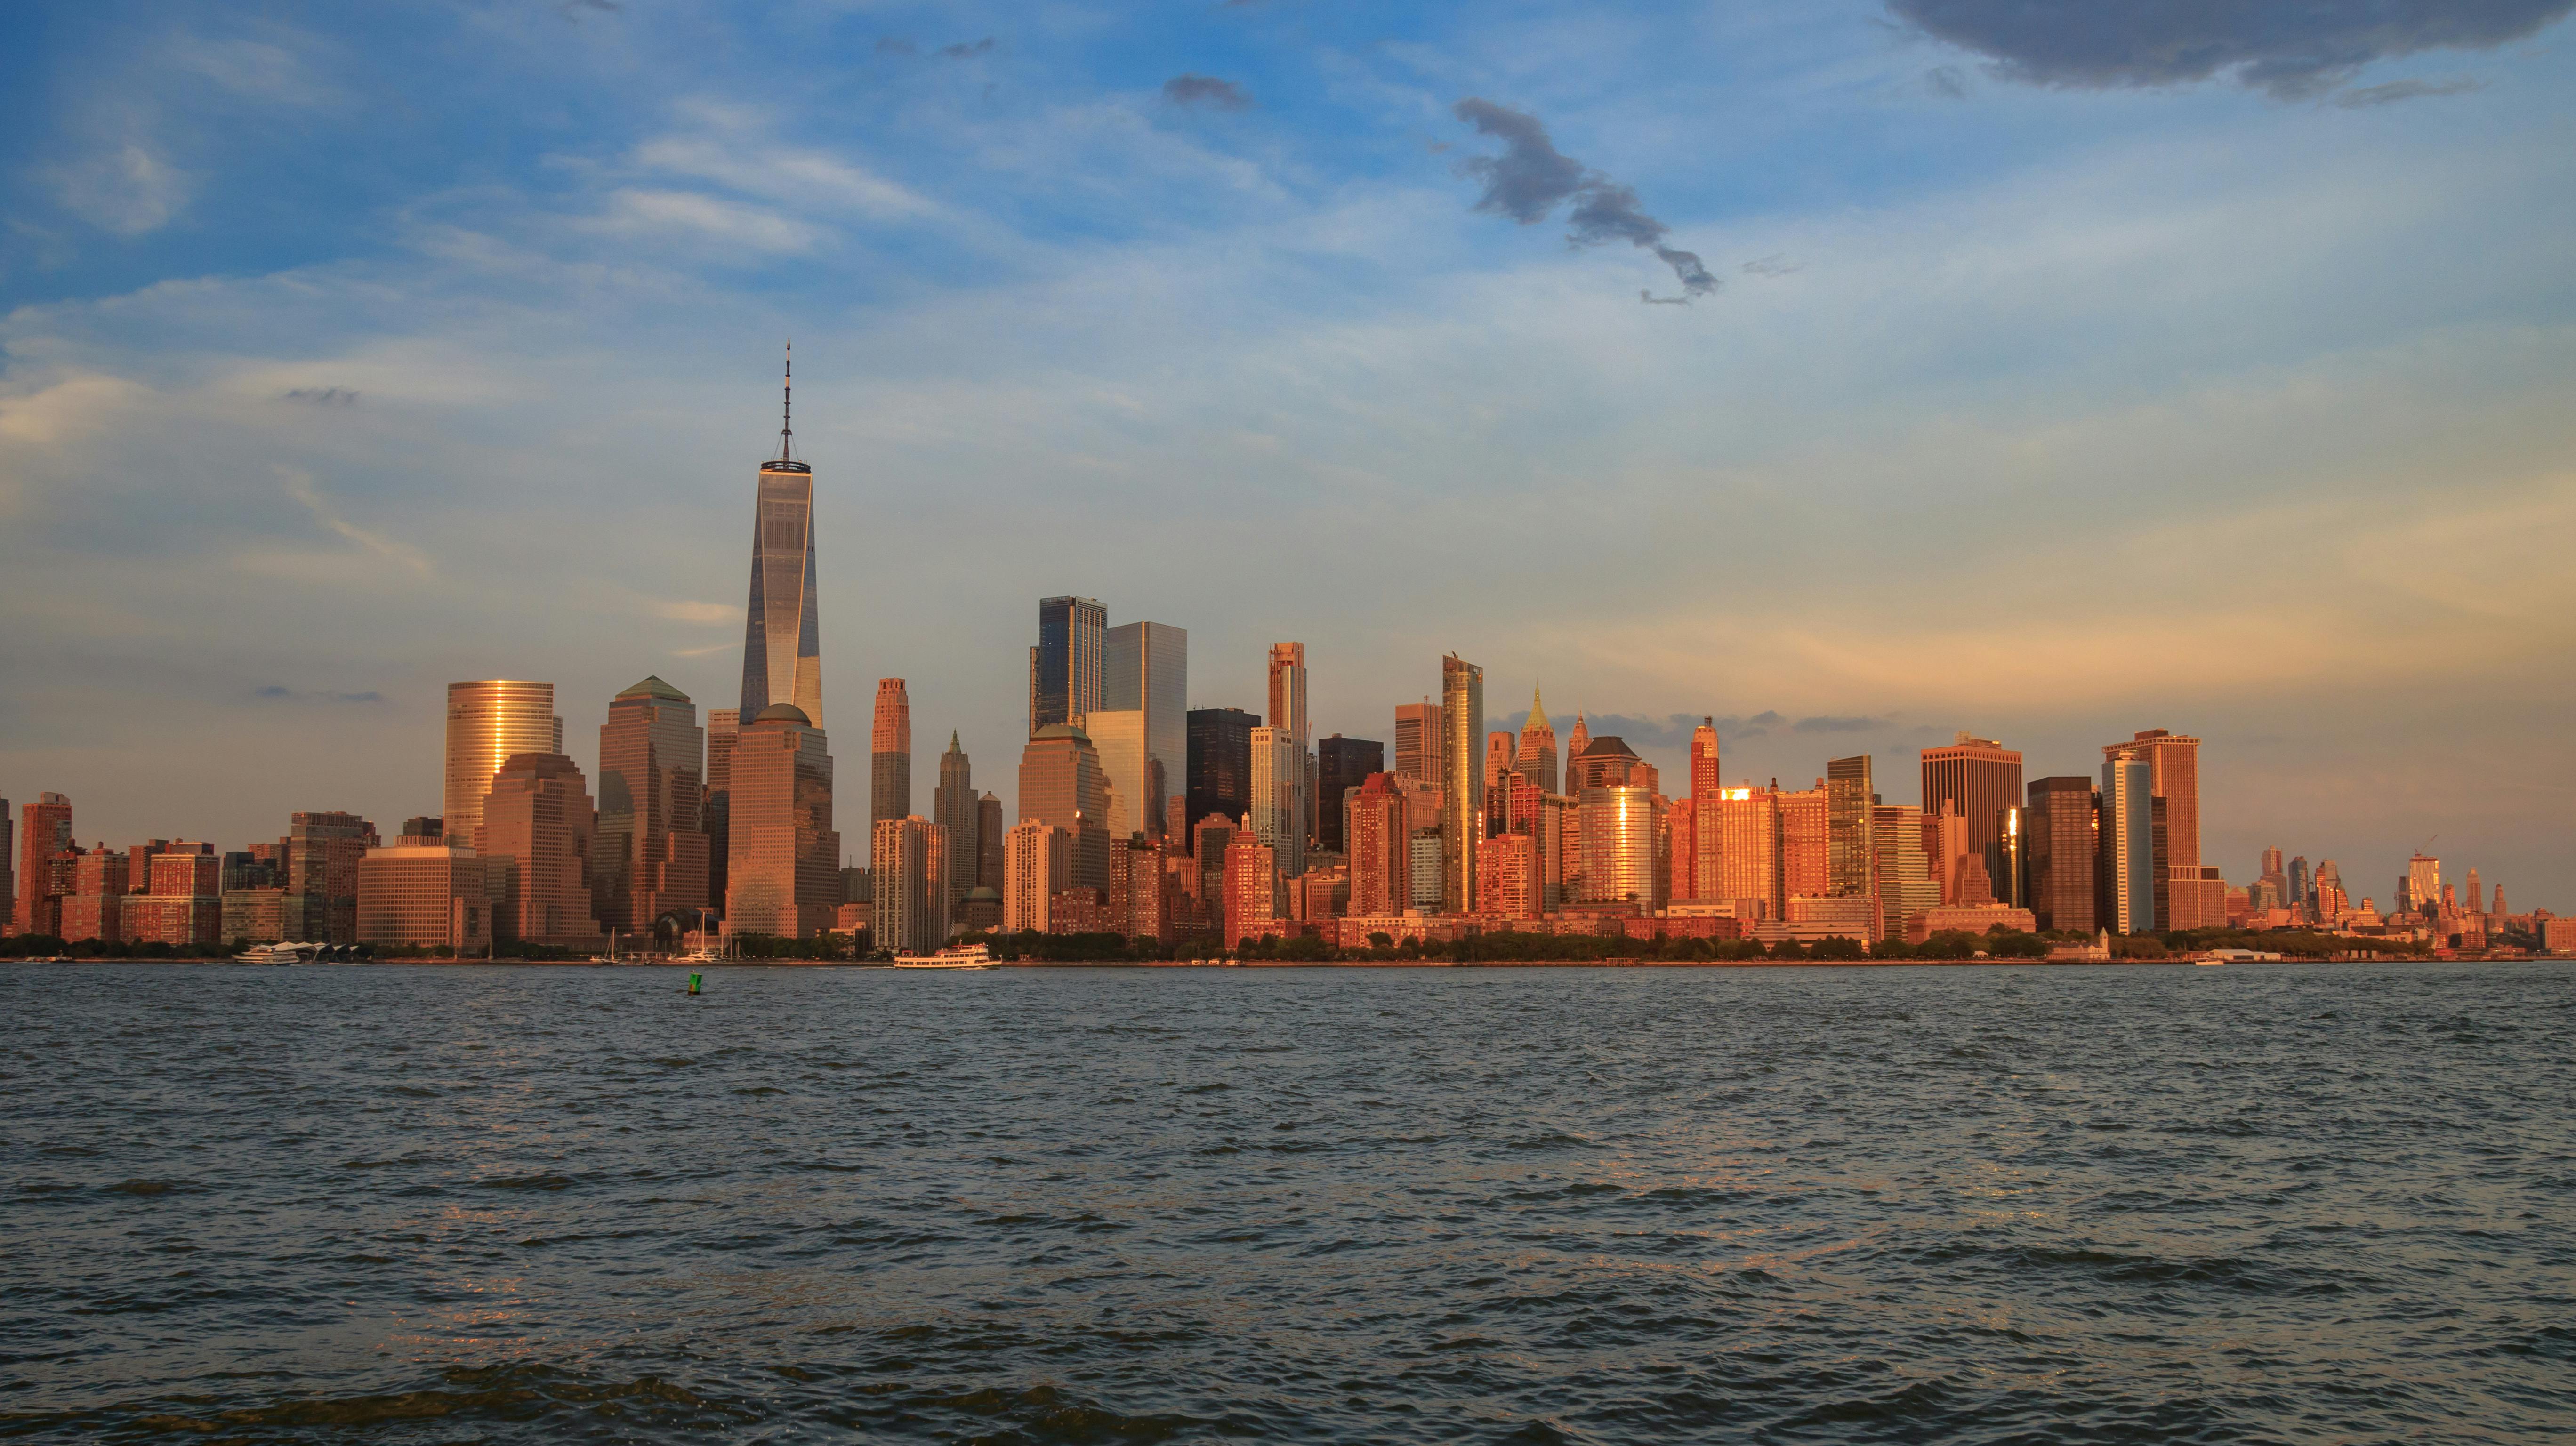 Skyline-dagtour door New York City